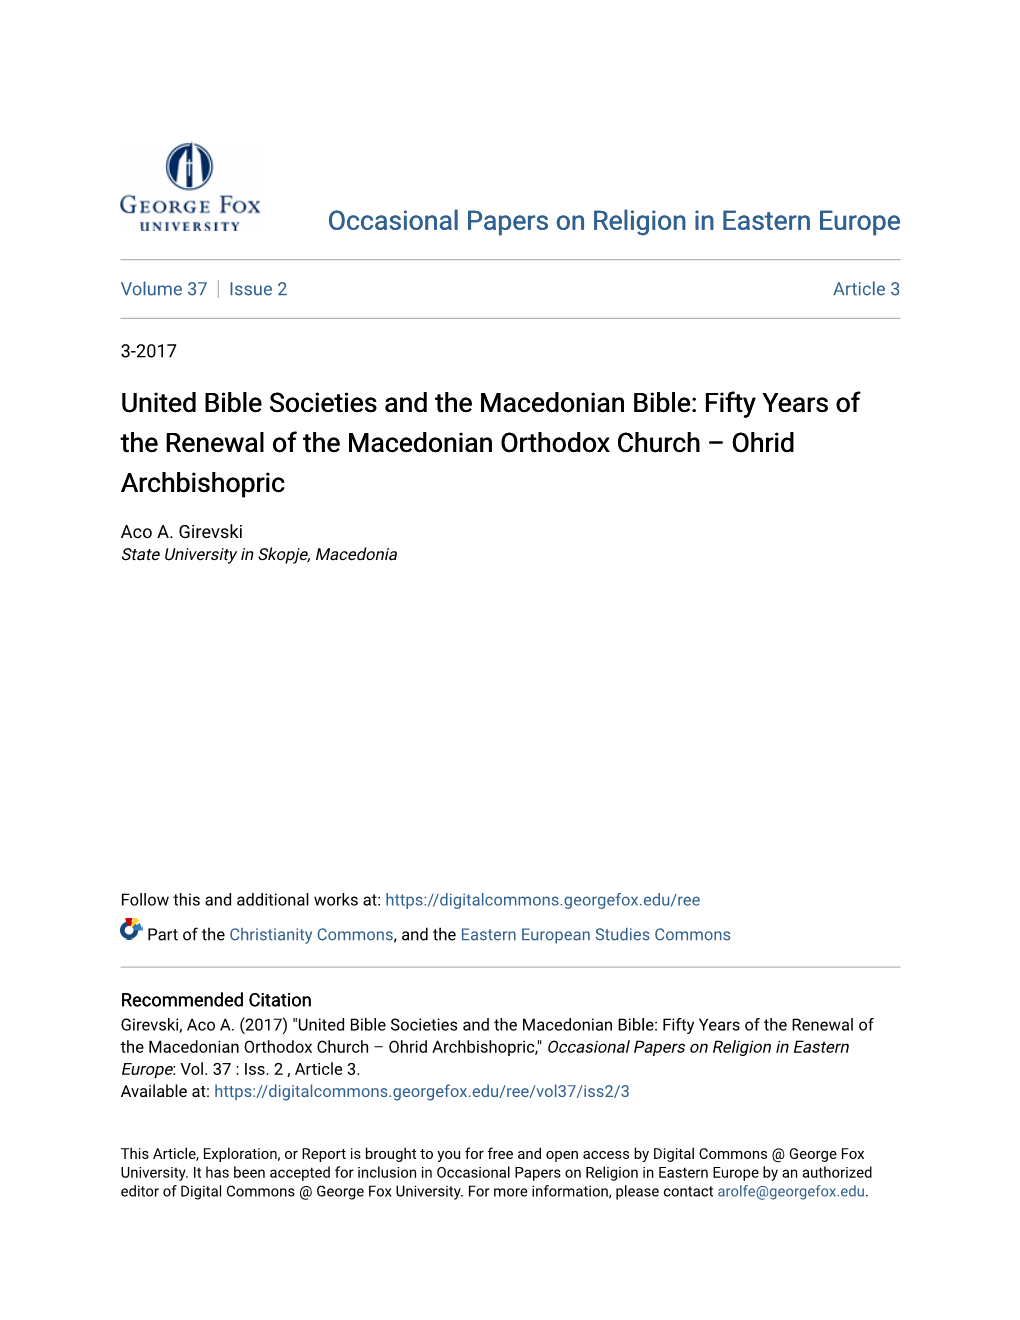 Fifty Years of the Renewal of the Macedonian Orthodox Church Â•Fi